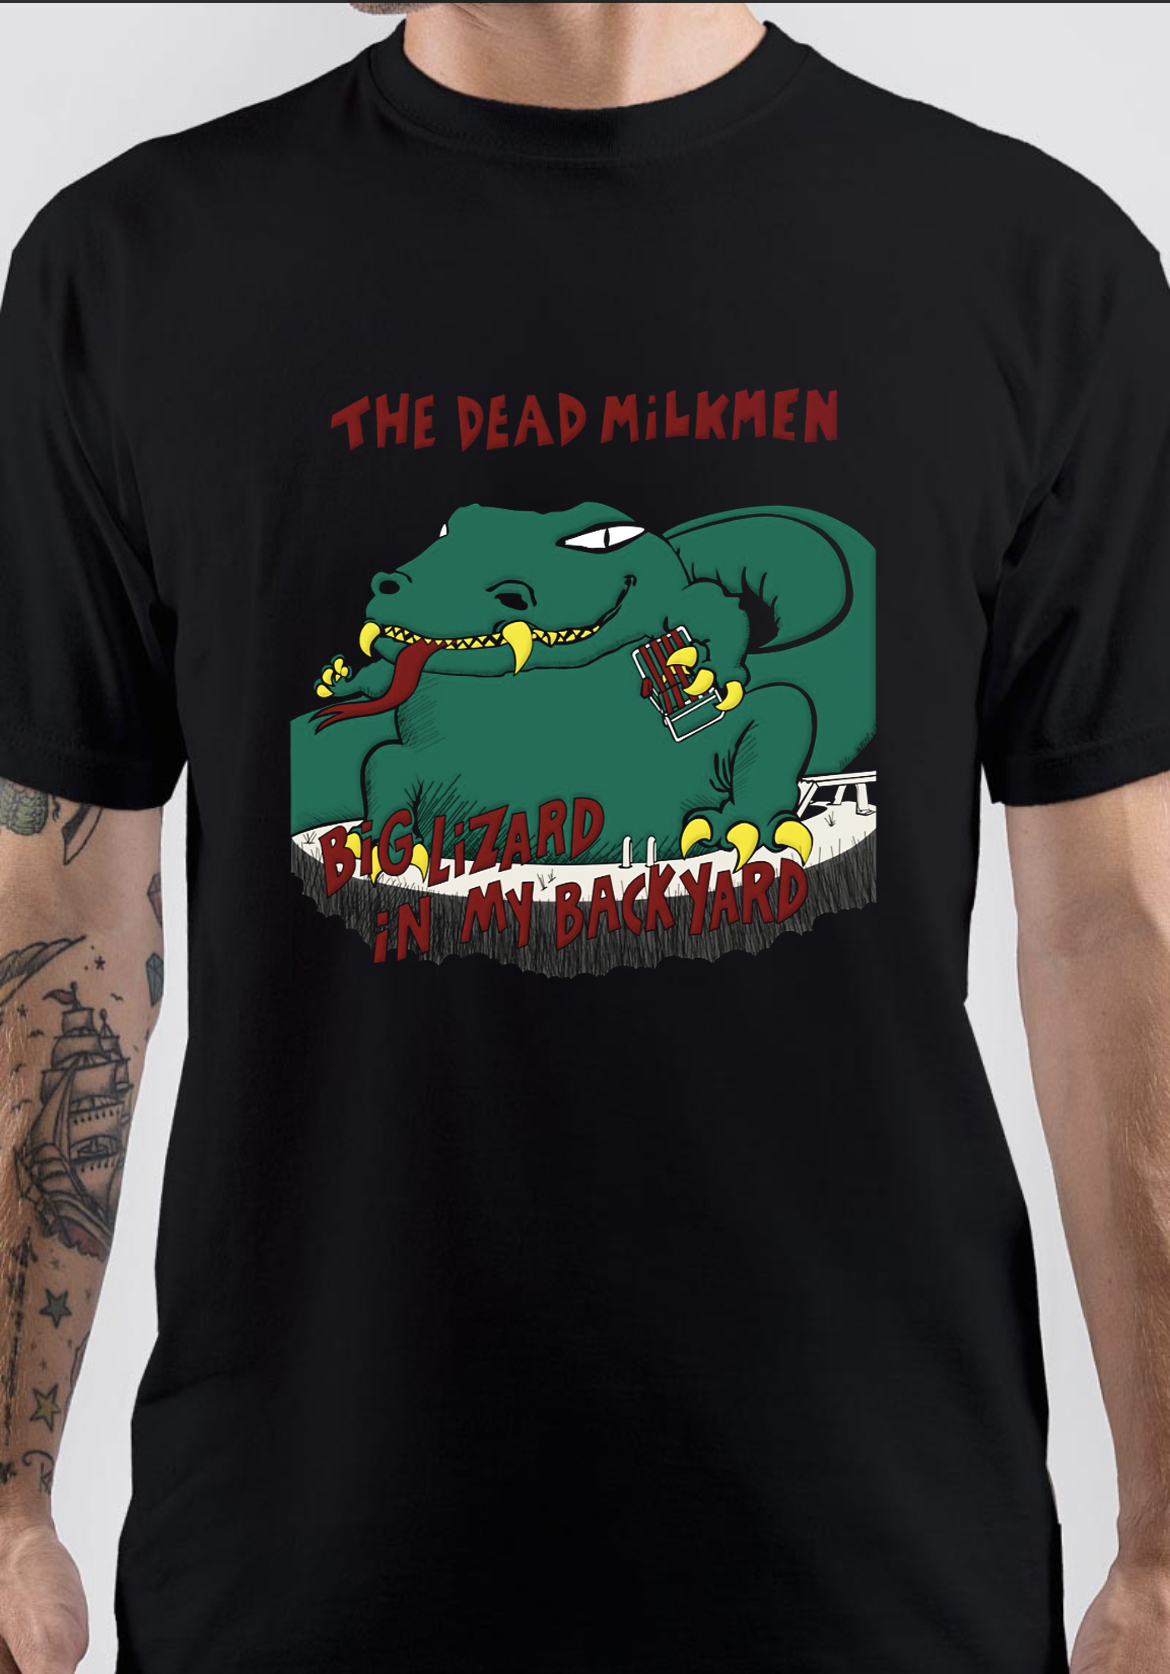 The Dead Milkmen T-Shirt And Merchandise